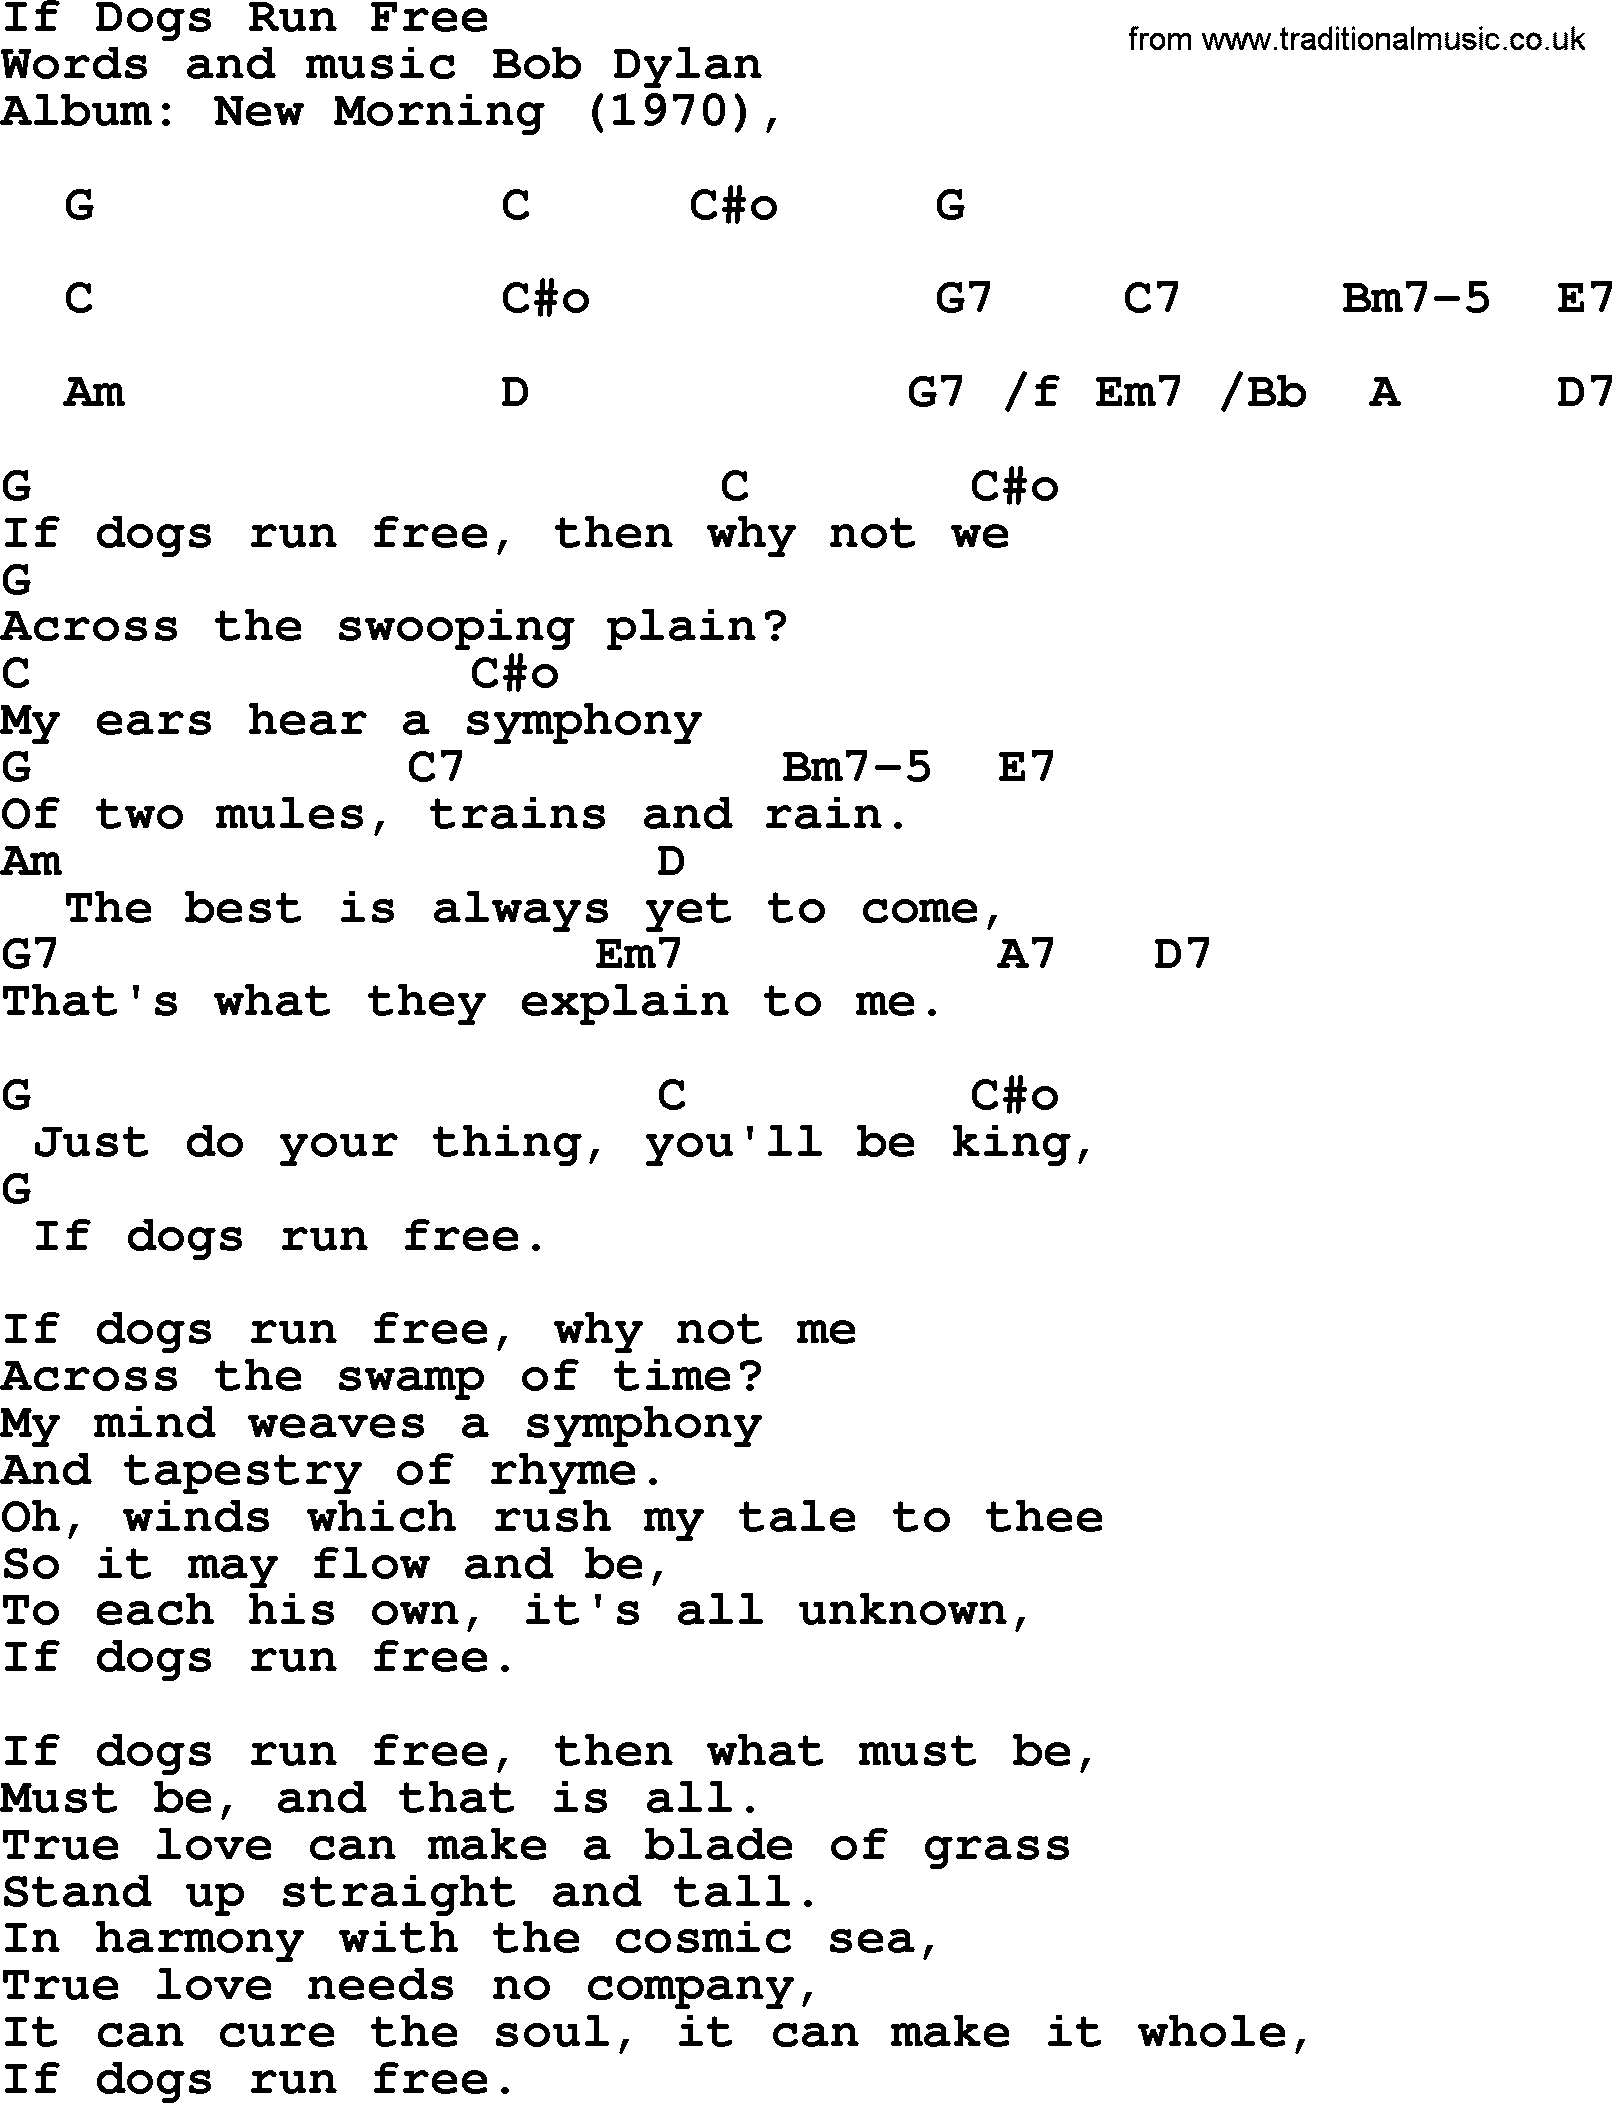 Bob Dylan song, lyrics with chords - If Dogs Run Free